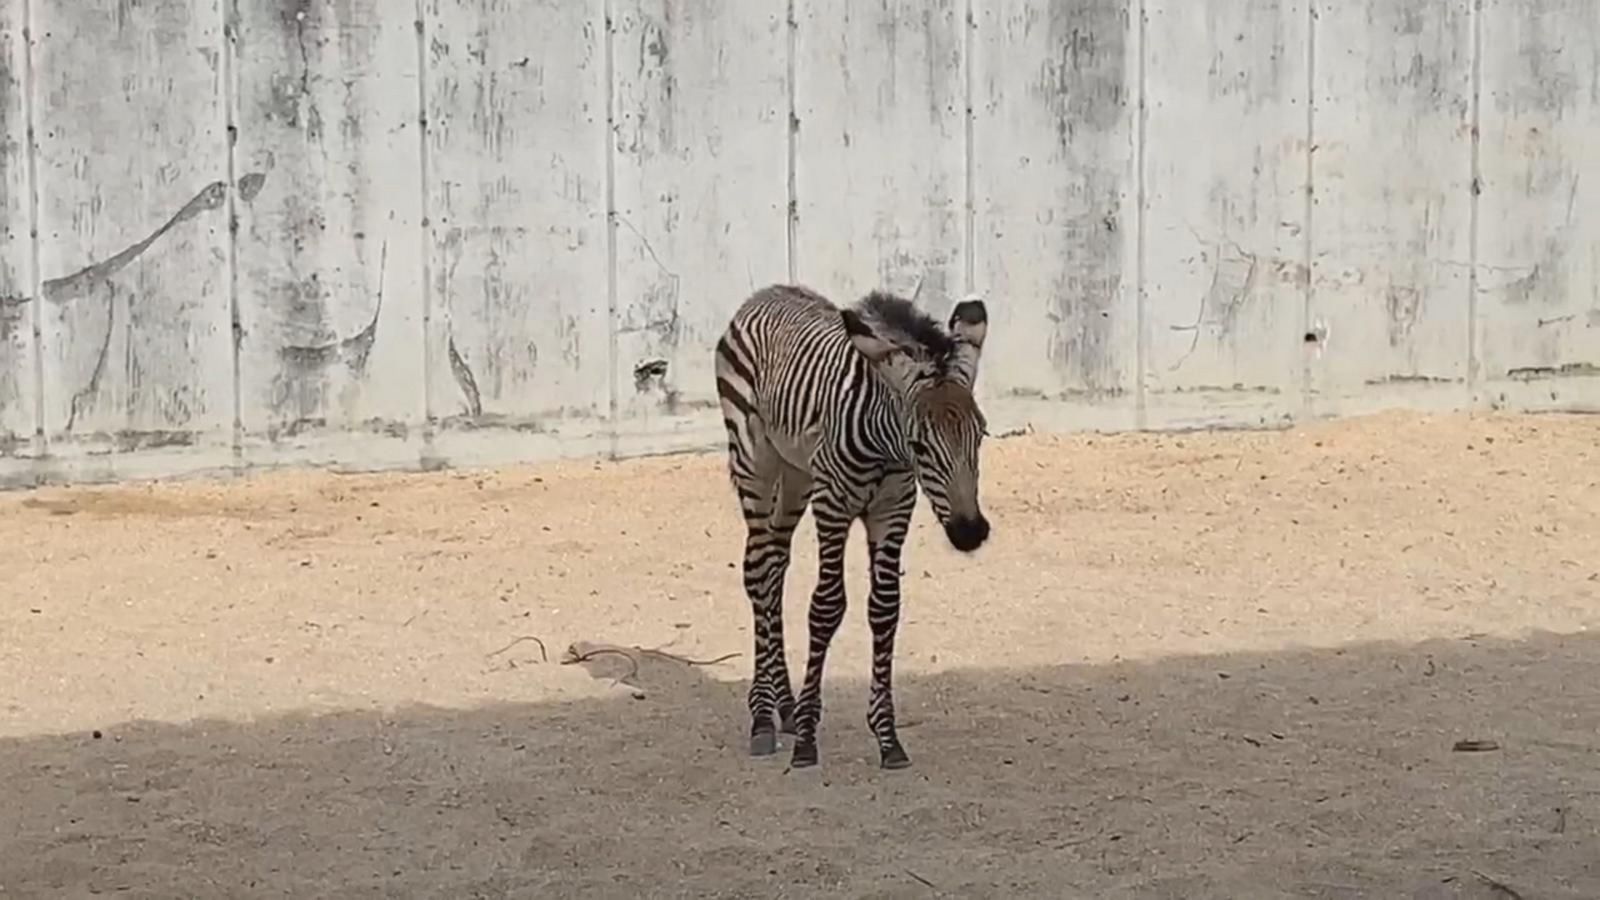 Disney's Animal Kingdom welcomes new baby zebra - Good Morning America